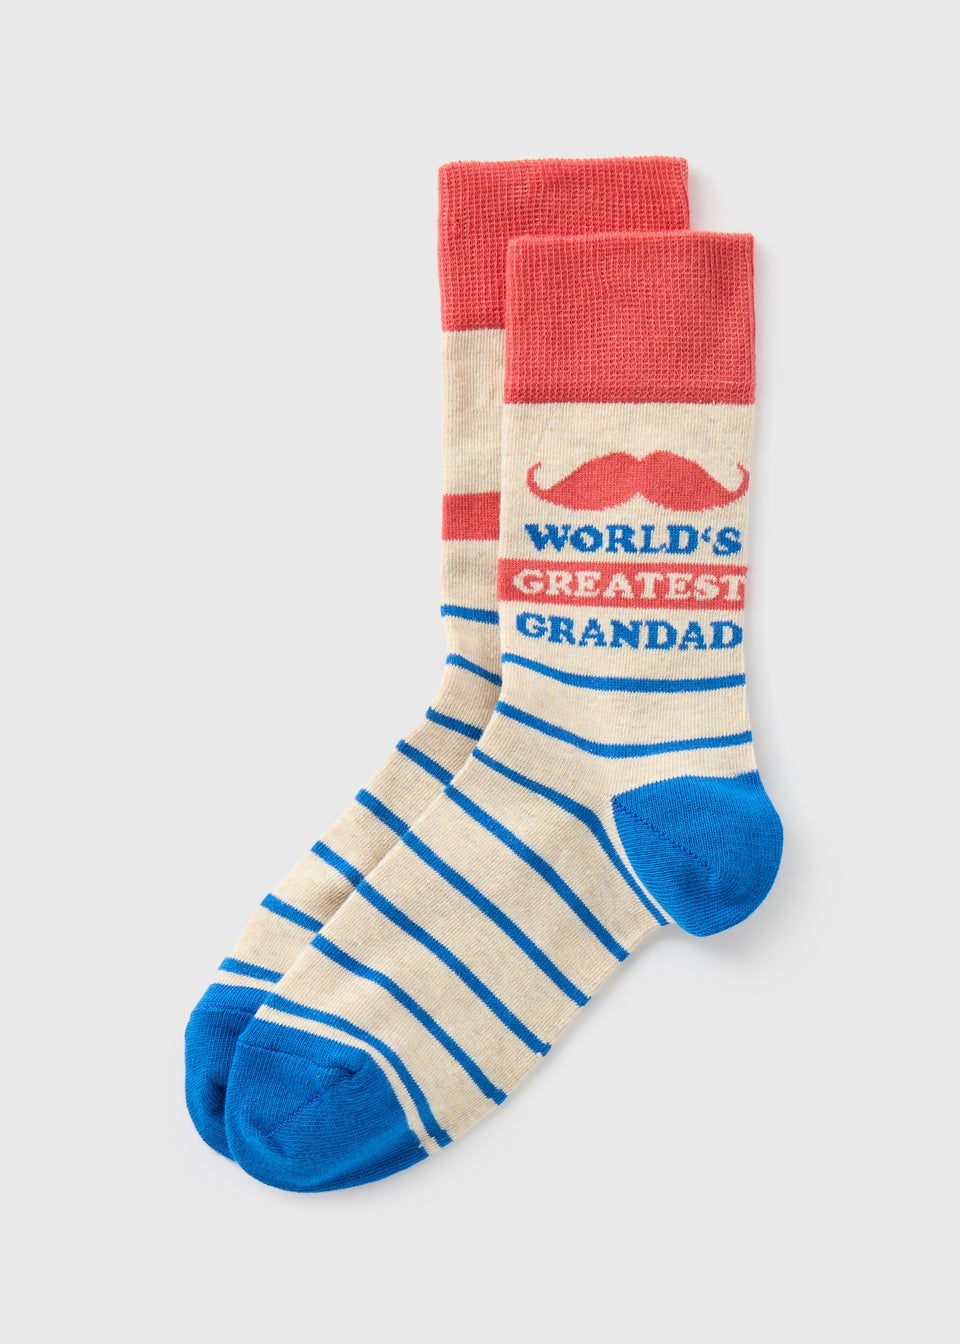 Beige 'Greatest Grandad' socks